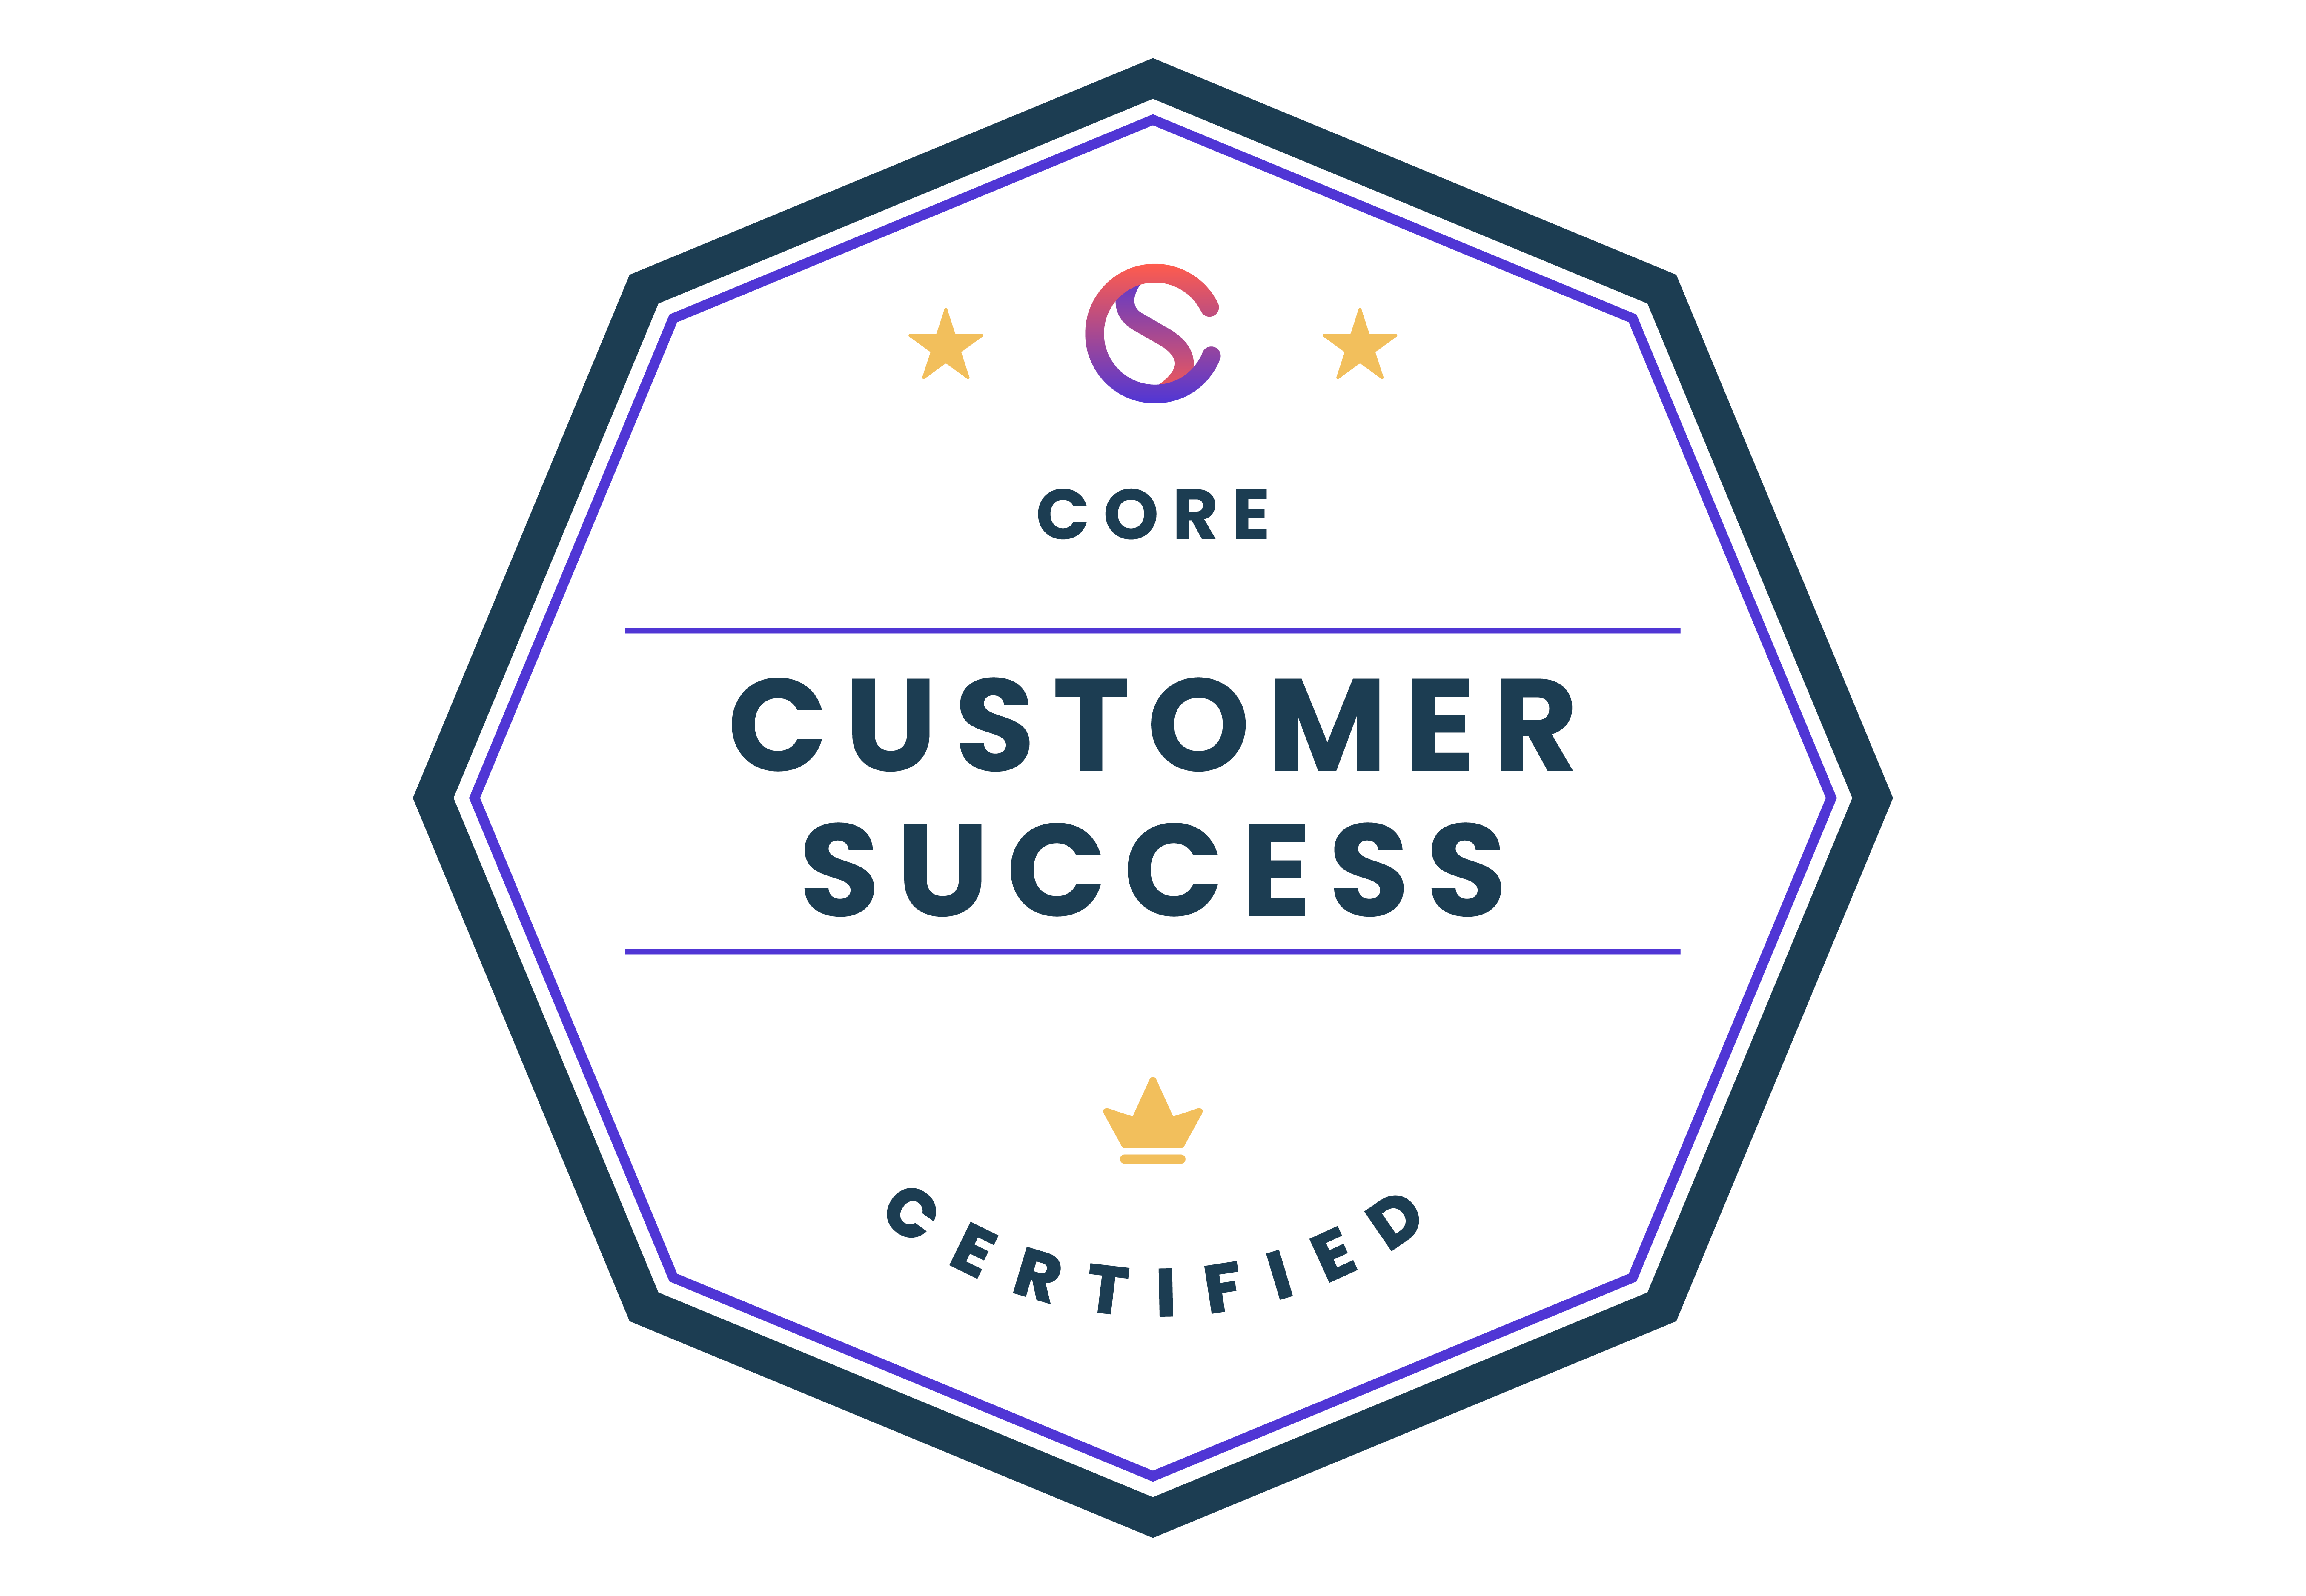 Customer Success Certified: Core badge